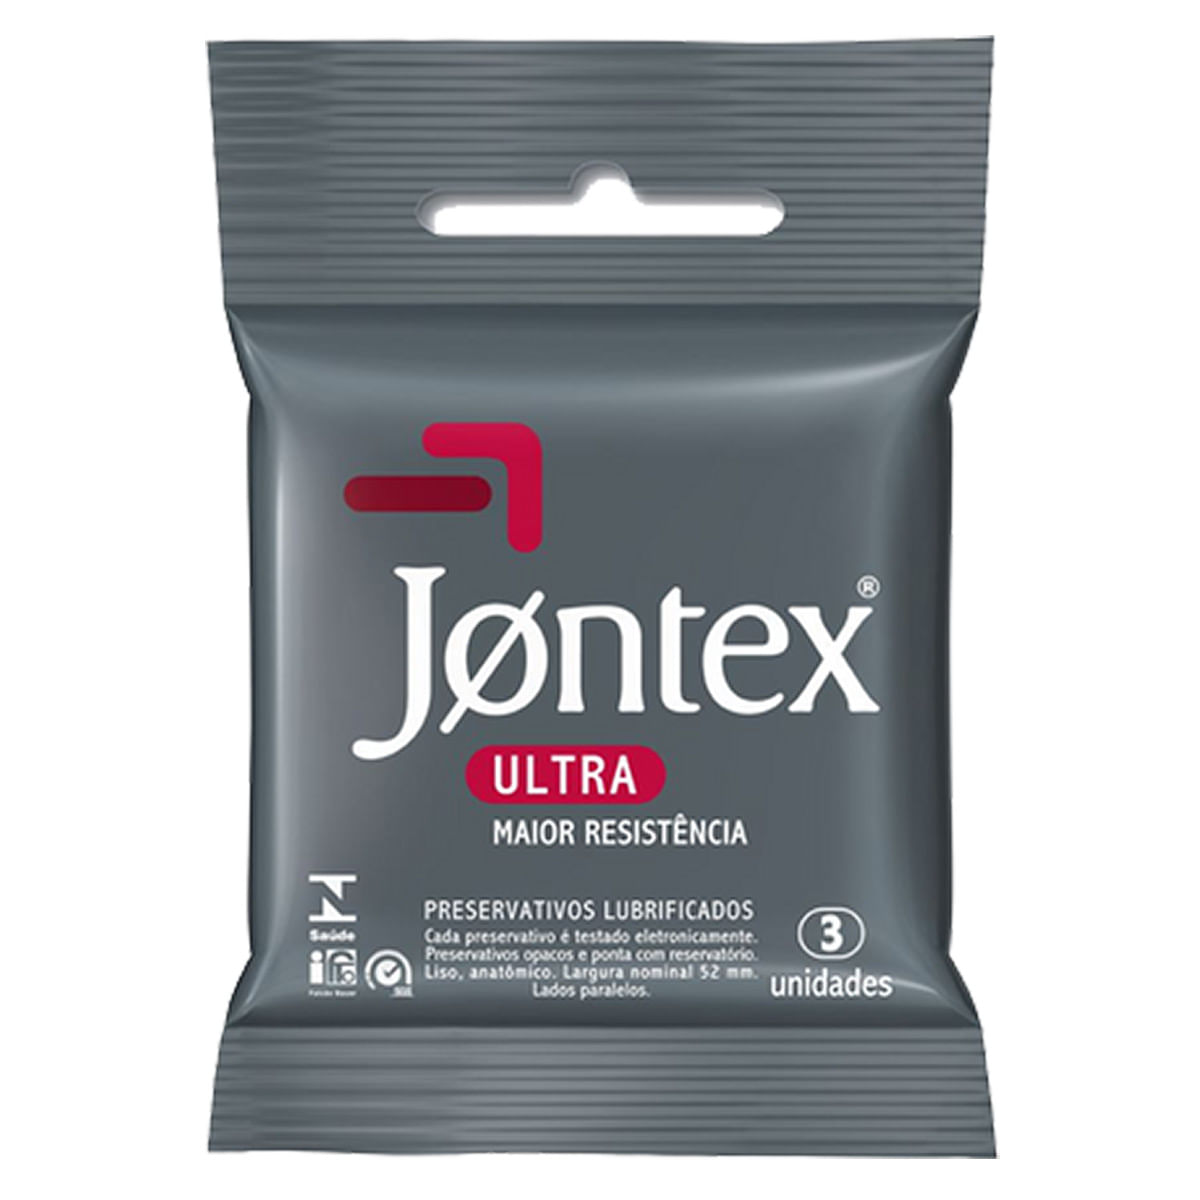 Preservativos Lubrificados Ultra Resistente com 3 unidades Jontex